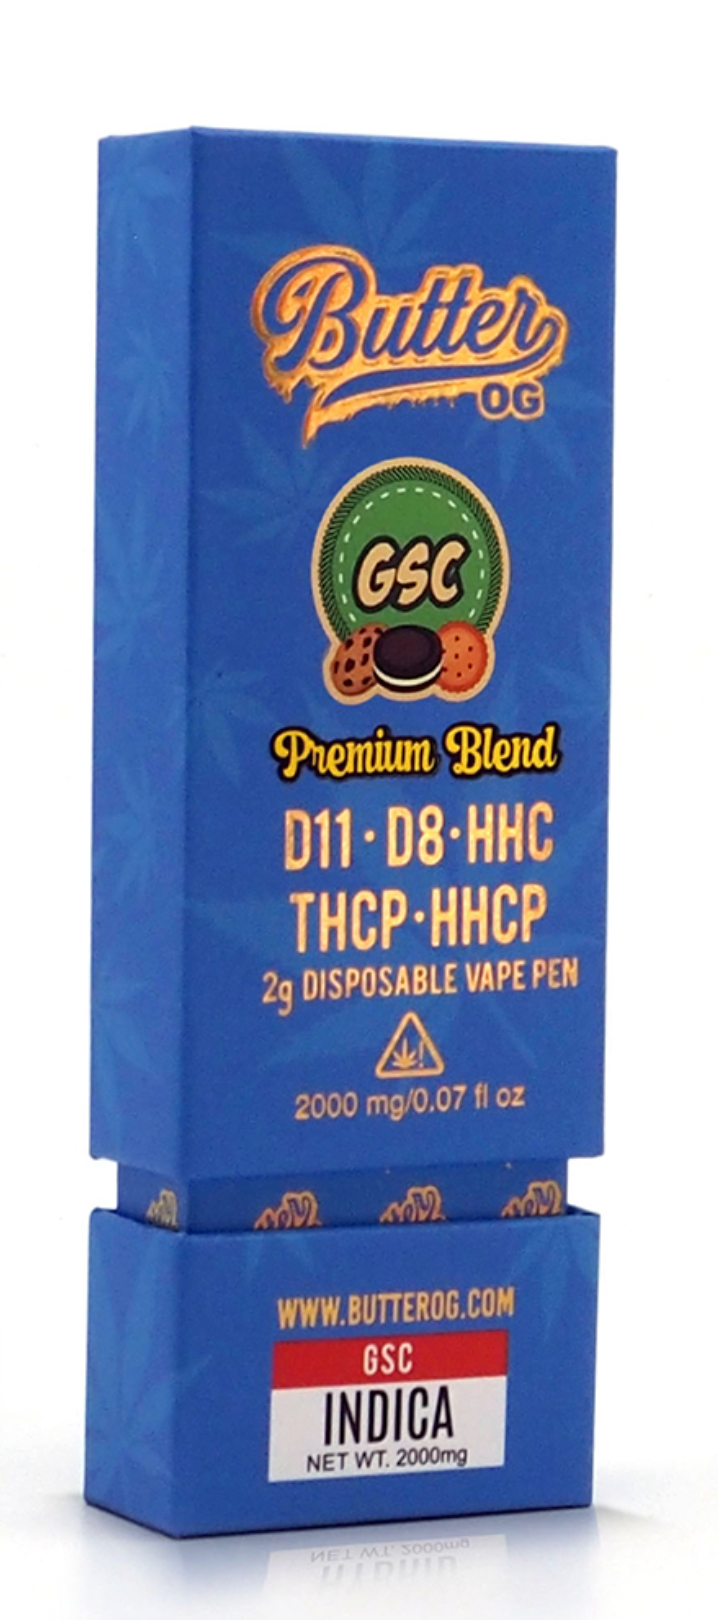 Butter OG Premium Blend D11, D8, HHC, THCP, HHCP 2g Disposable Vape - Girl Scout Cookies (Indica) - Headshop.com